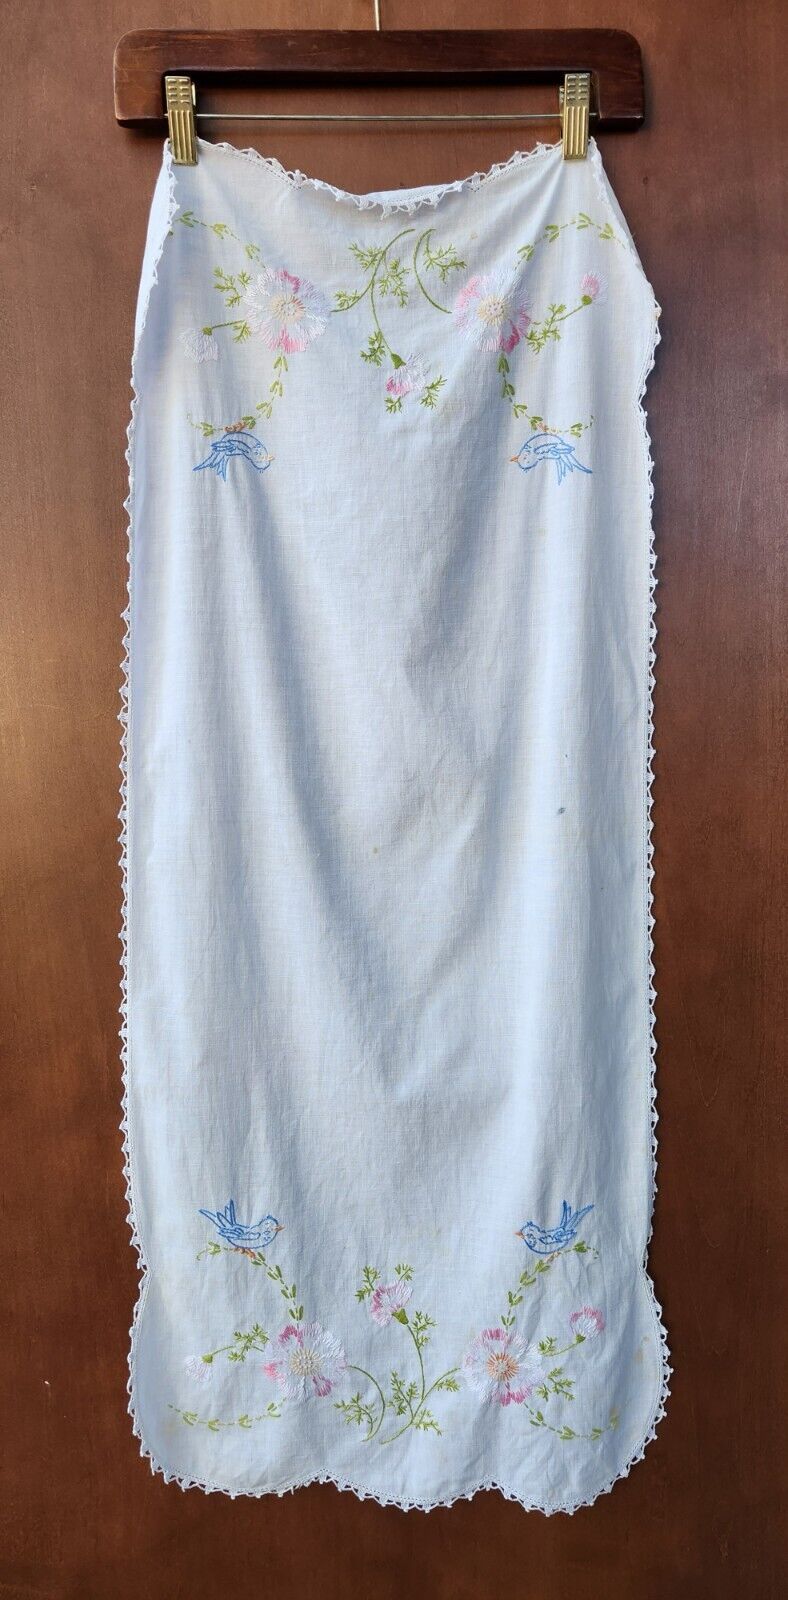 Vintage Embroidered White Linen Table Runner/Kitchen Towel Crochet Sides